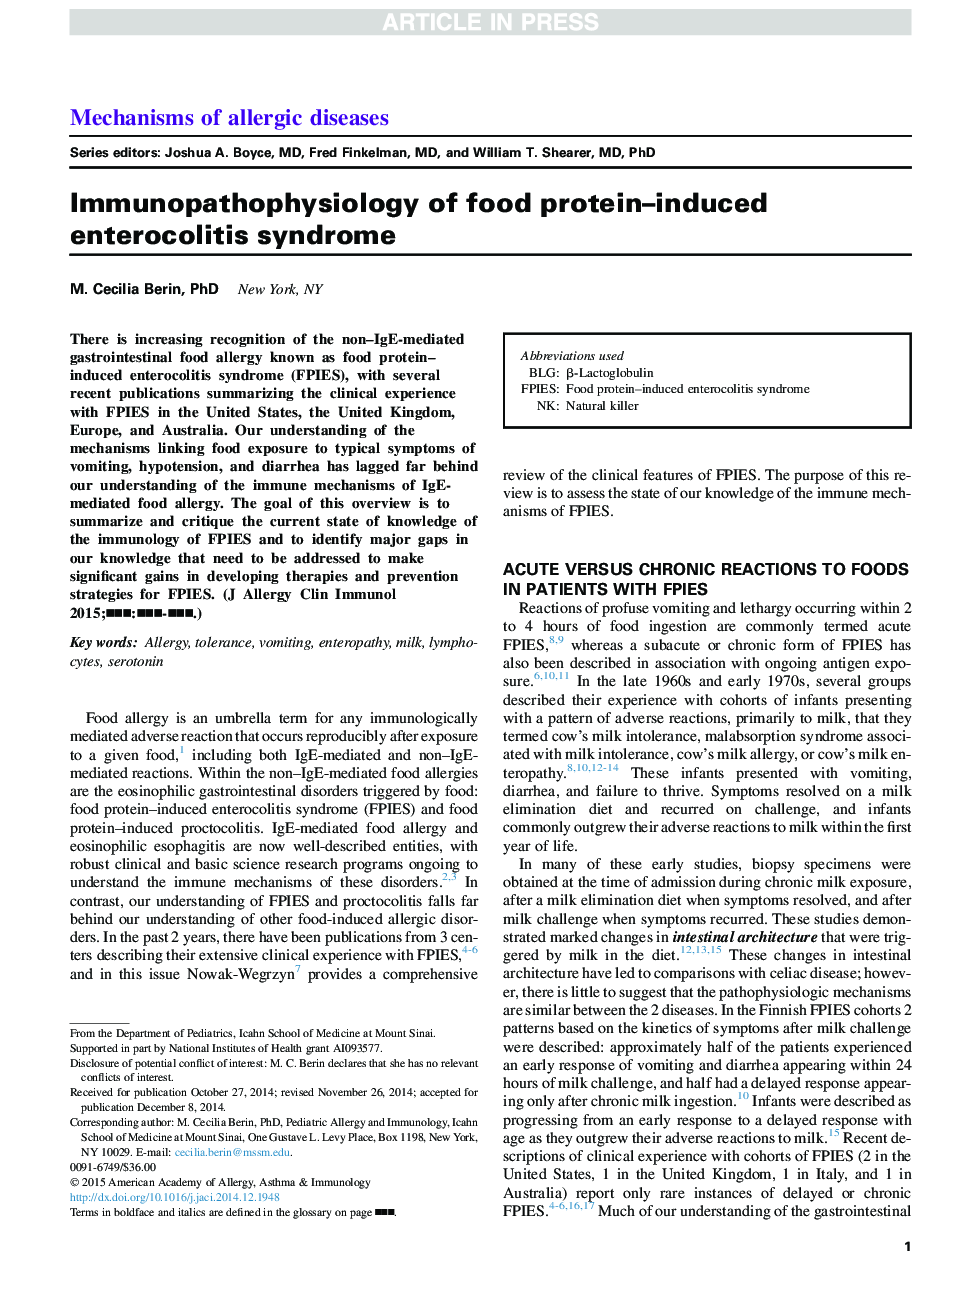 Immunopathophysiology of food protein-induced enterocolitis syndrome